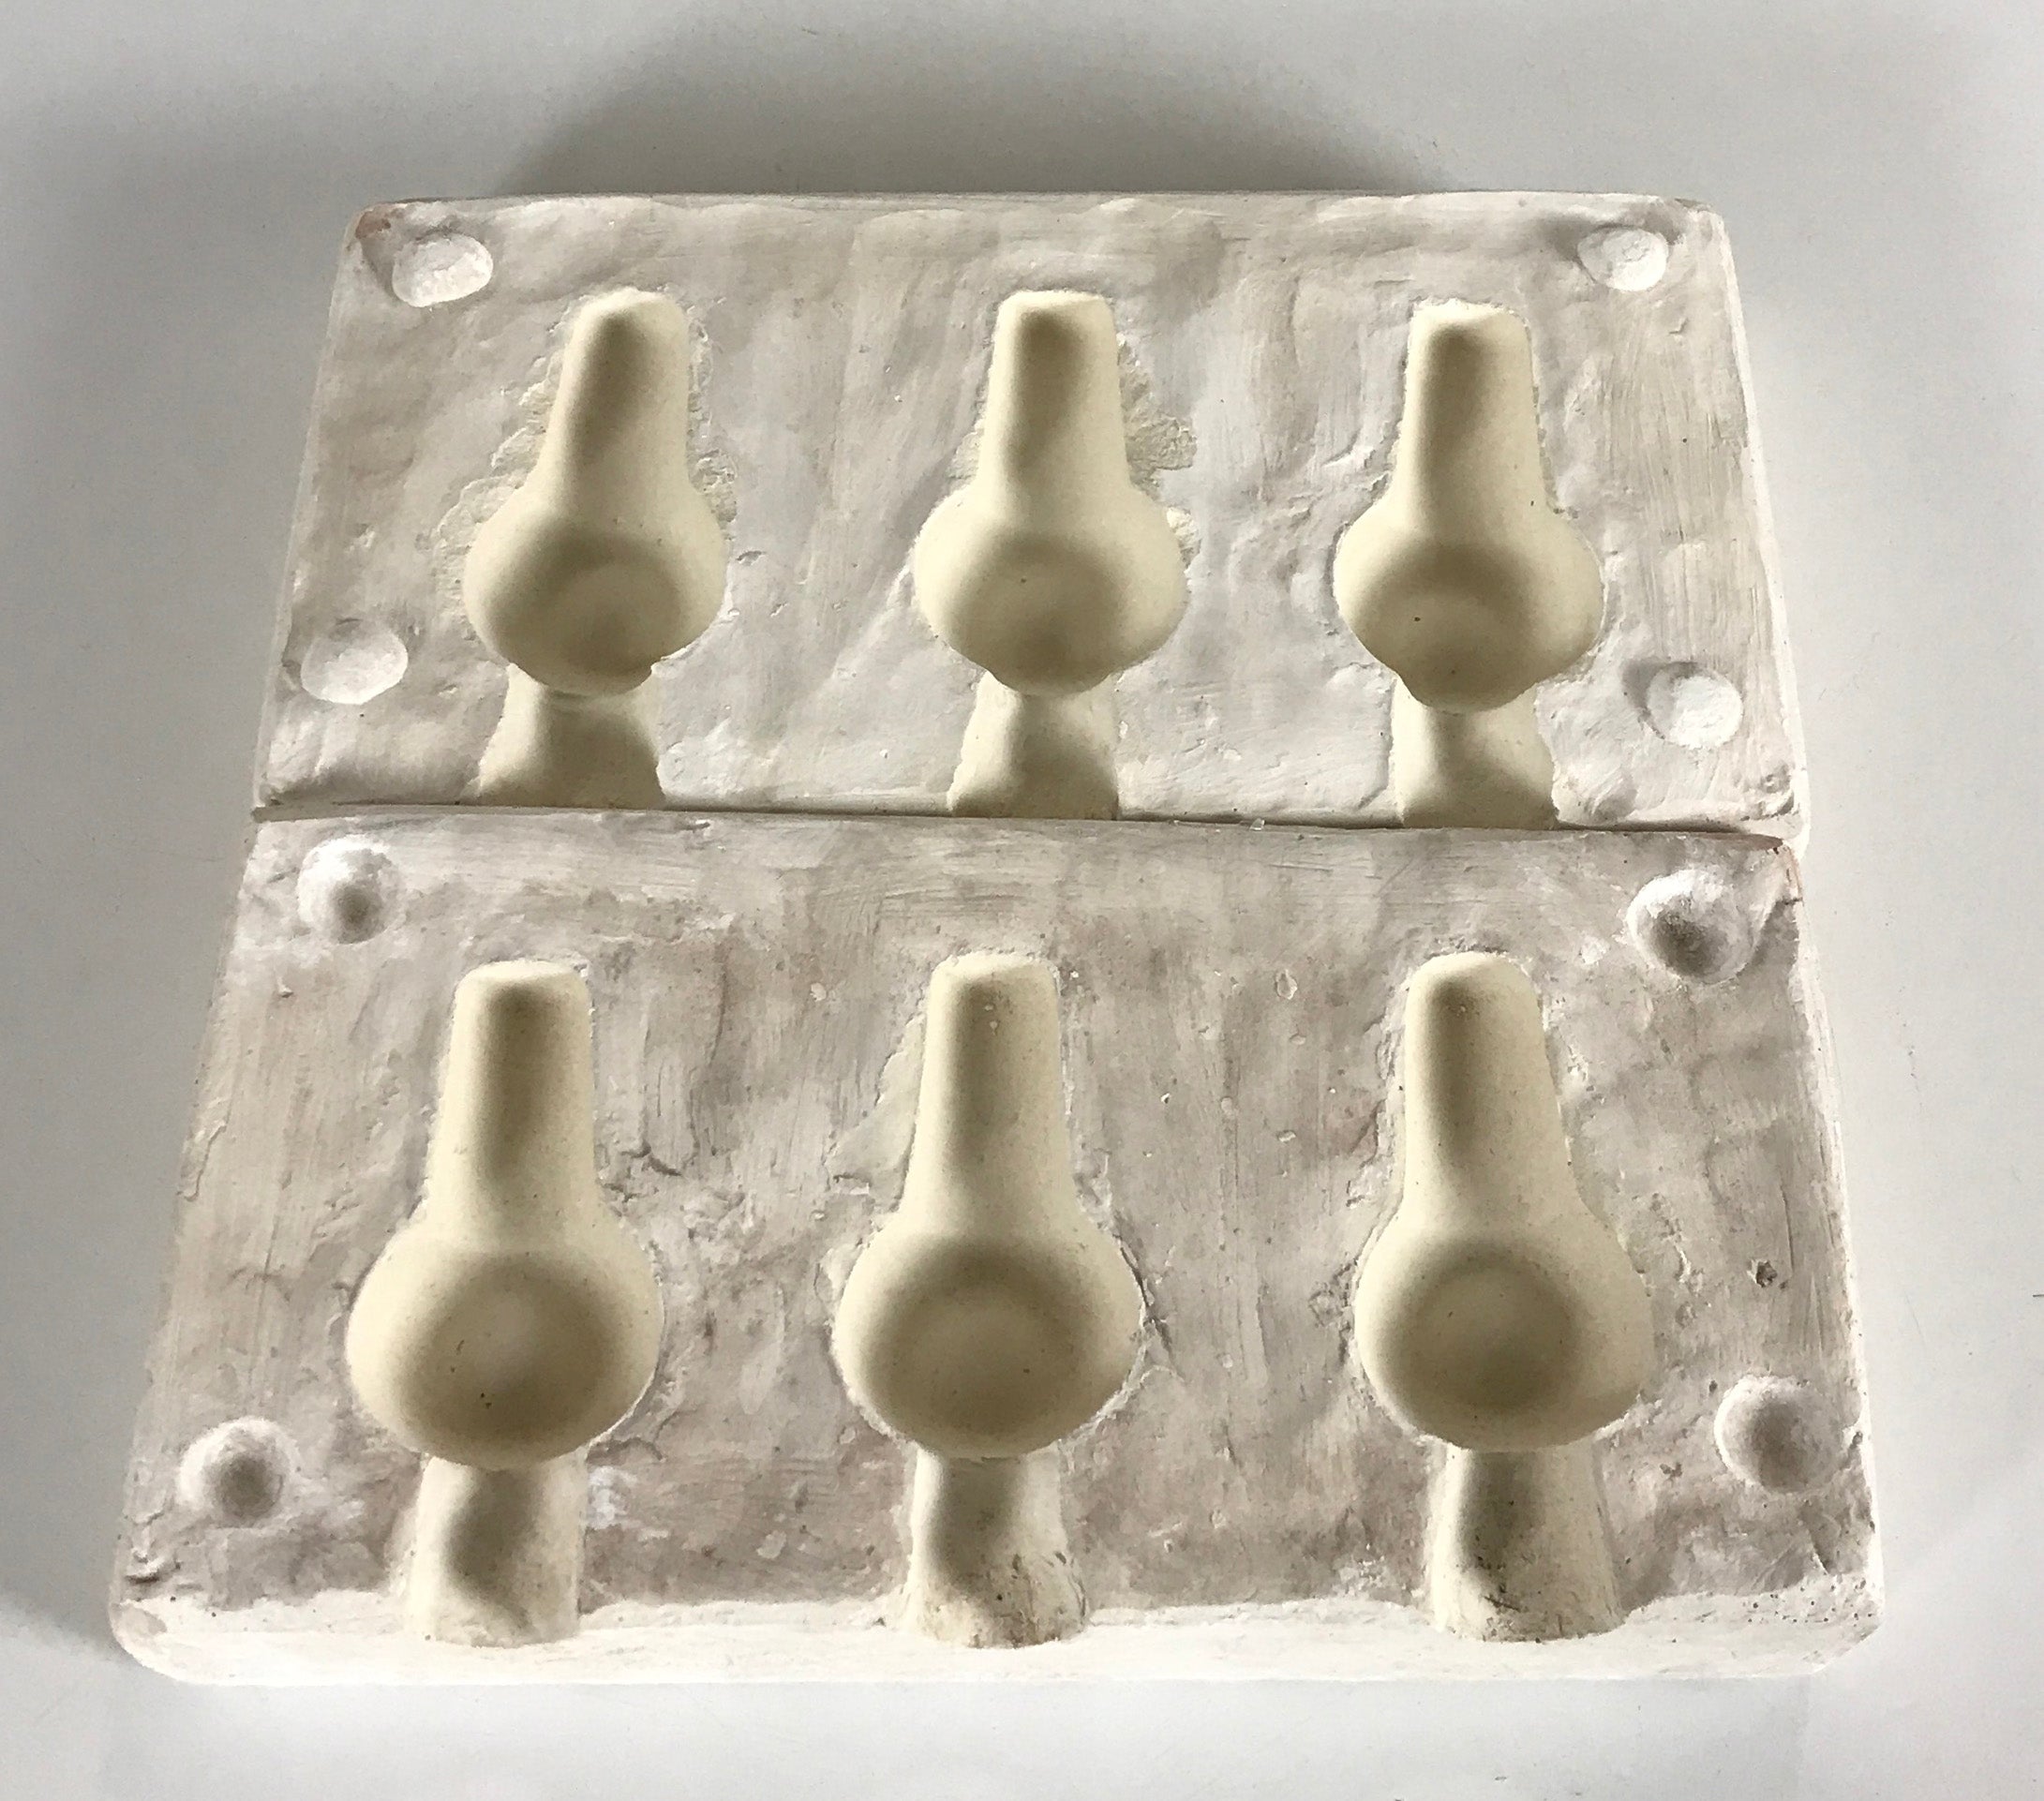 Three Bottle Ceramic Slip Casting Mold